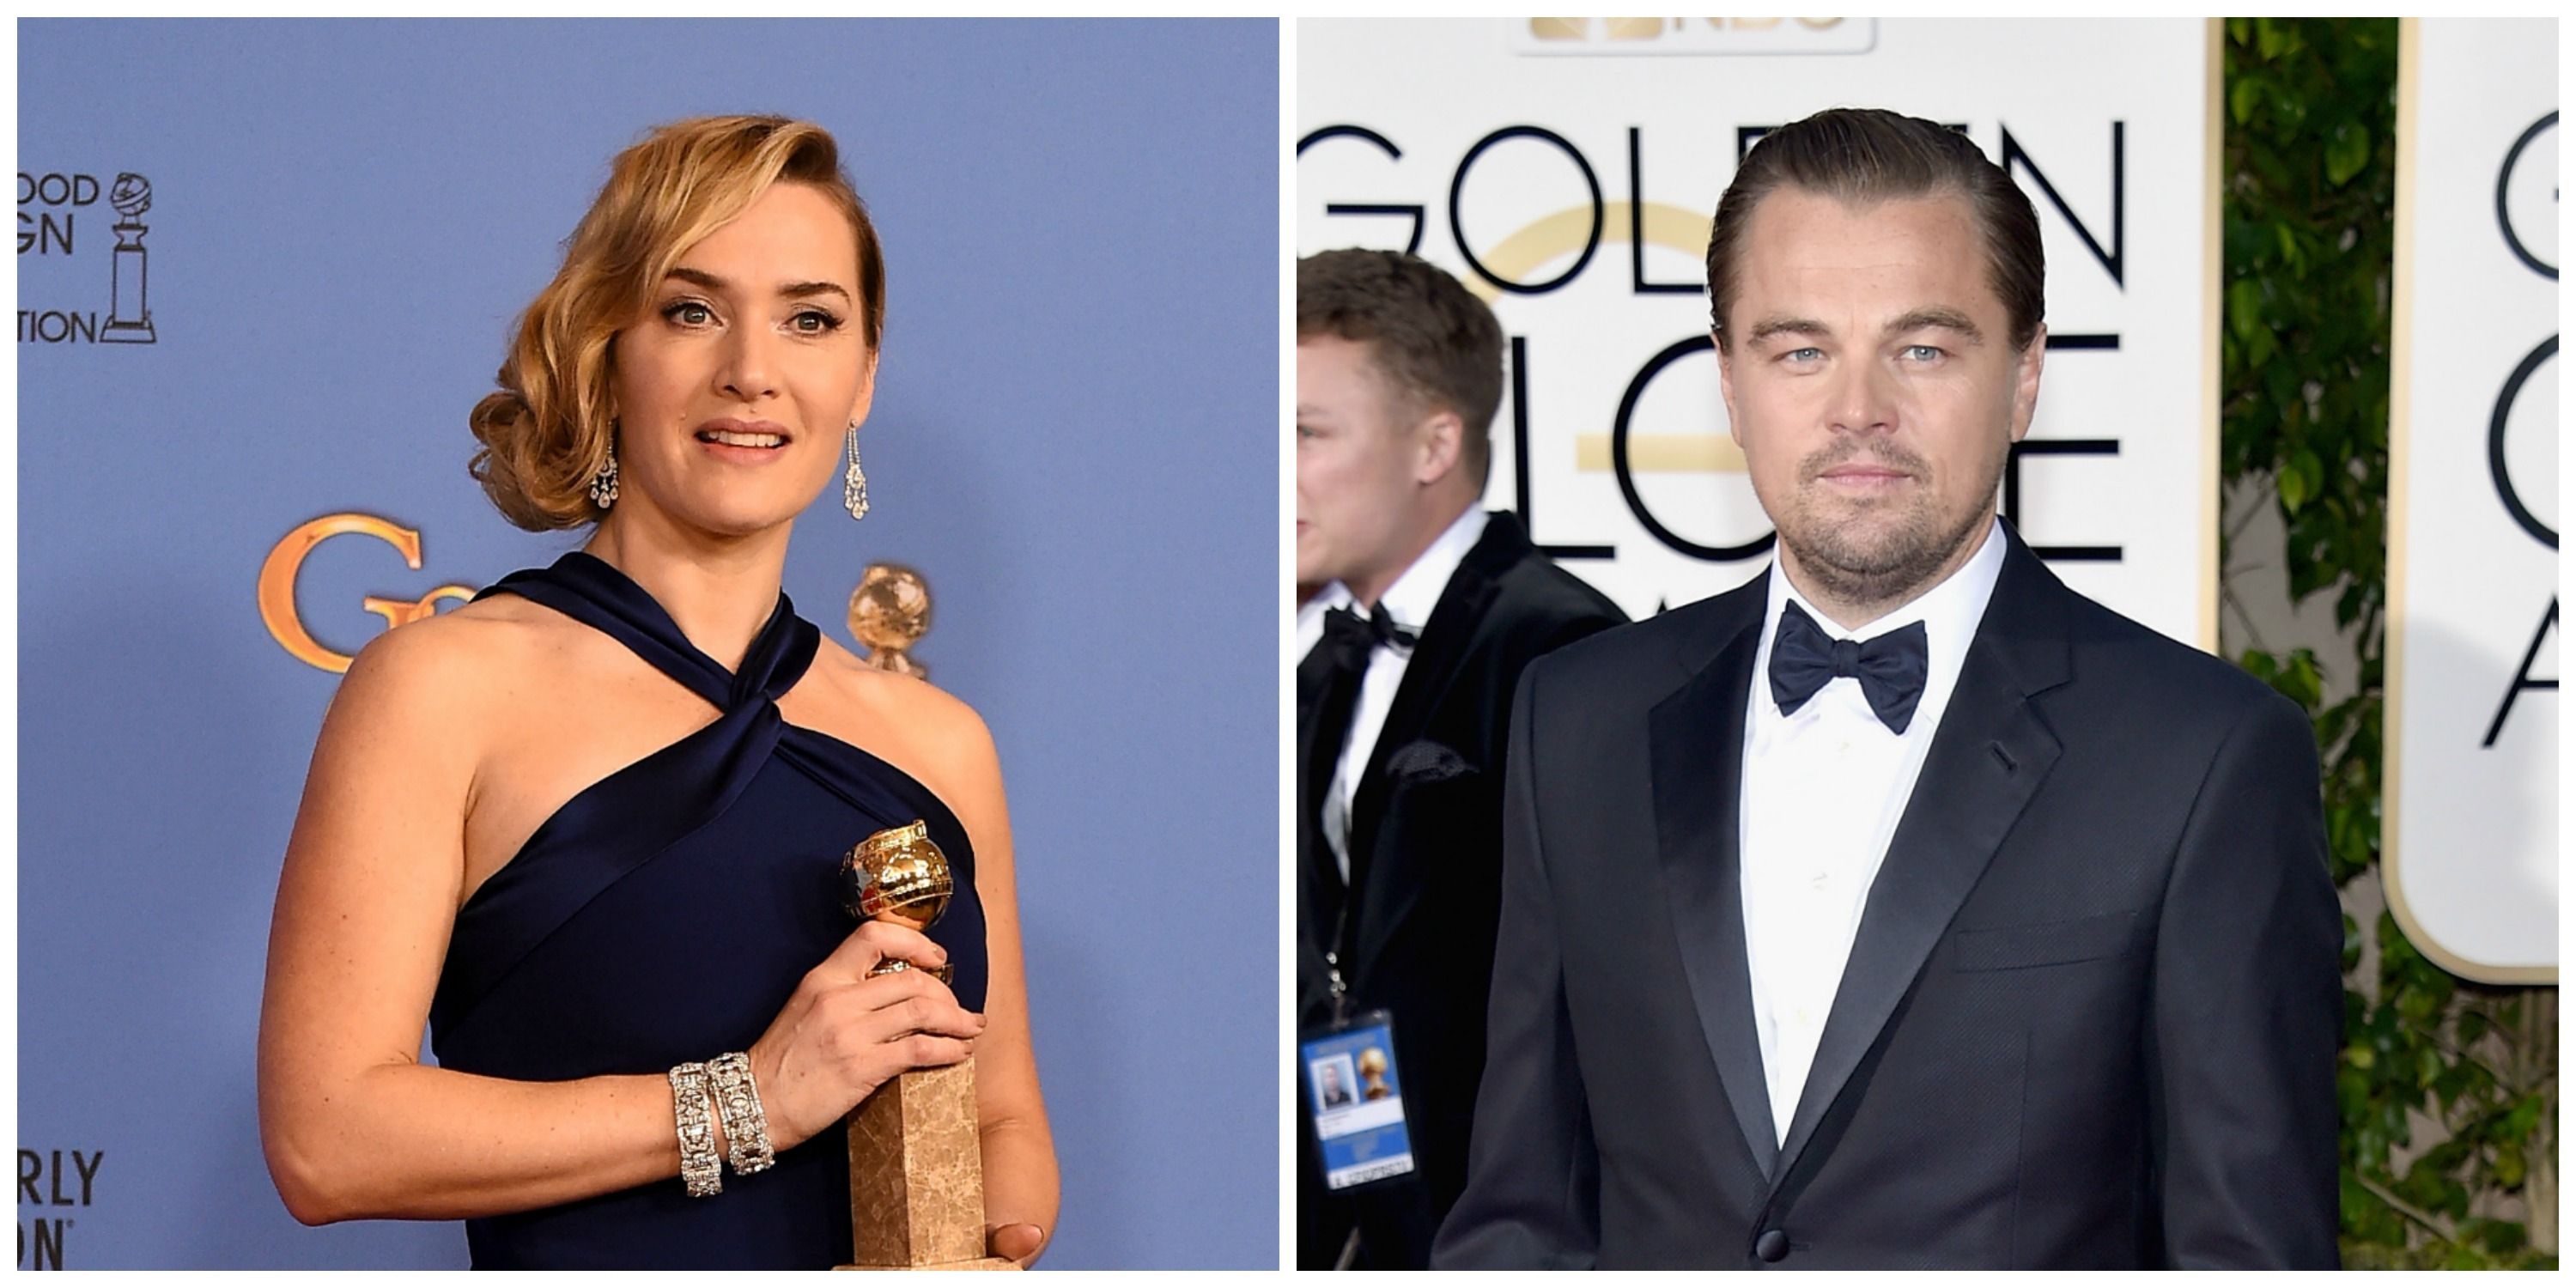 Leonardo DiCaprio & Kate Winslet at Golden Globes 2016 - Fashion Style Trends 2019